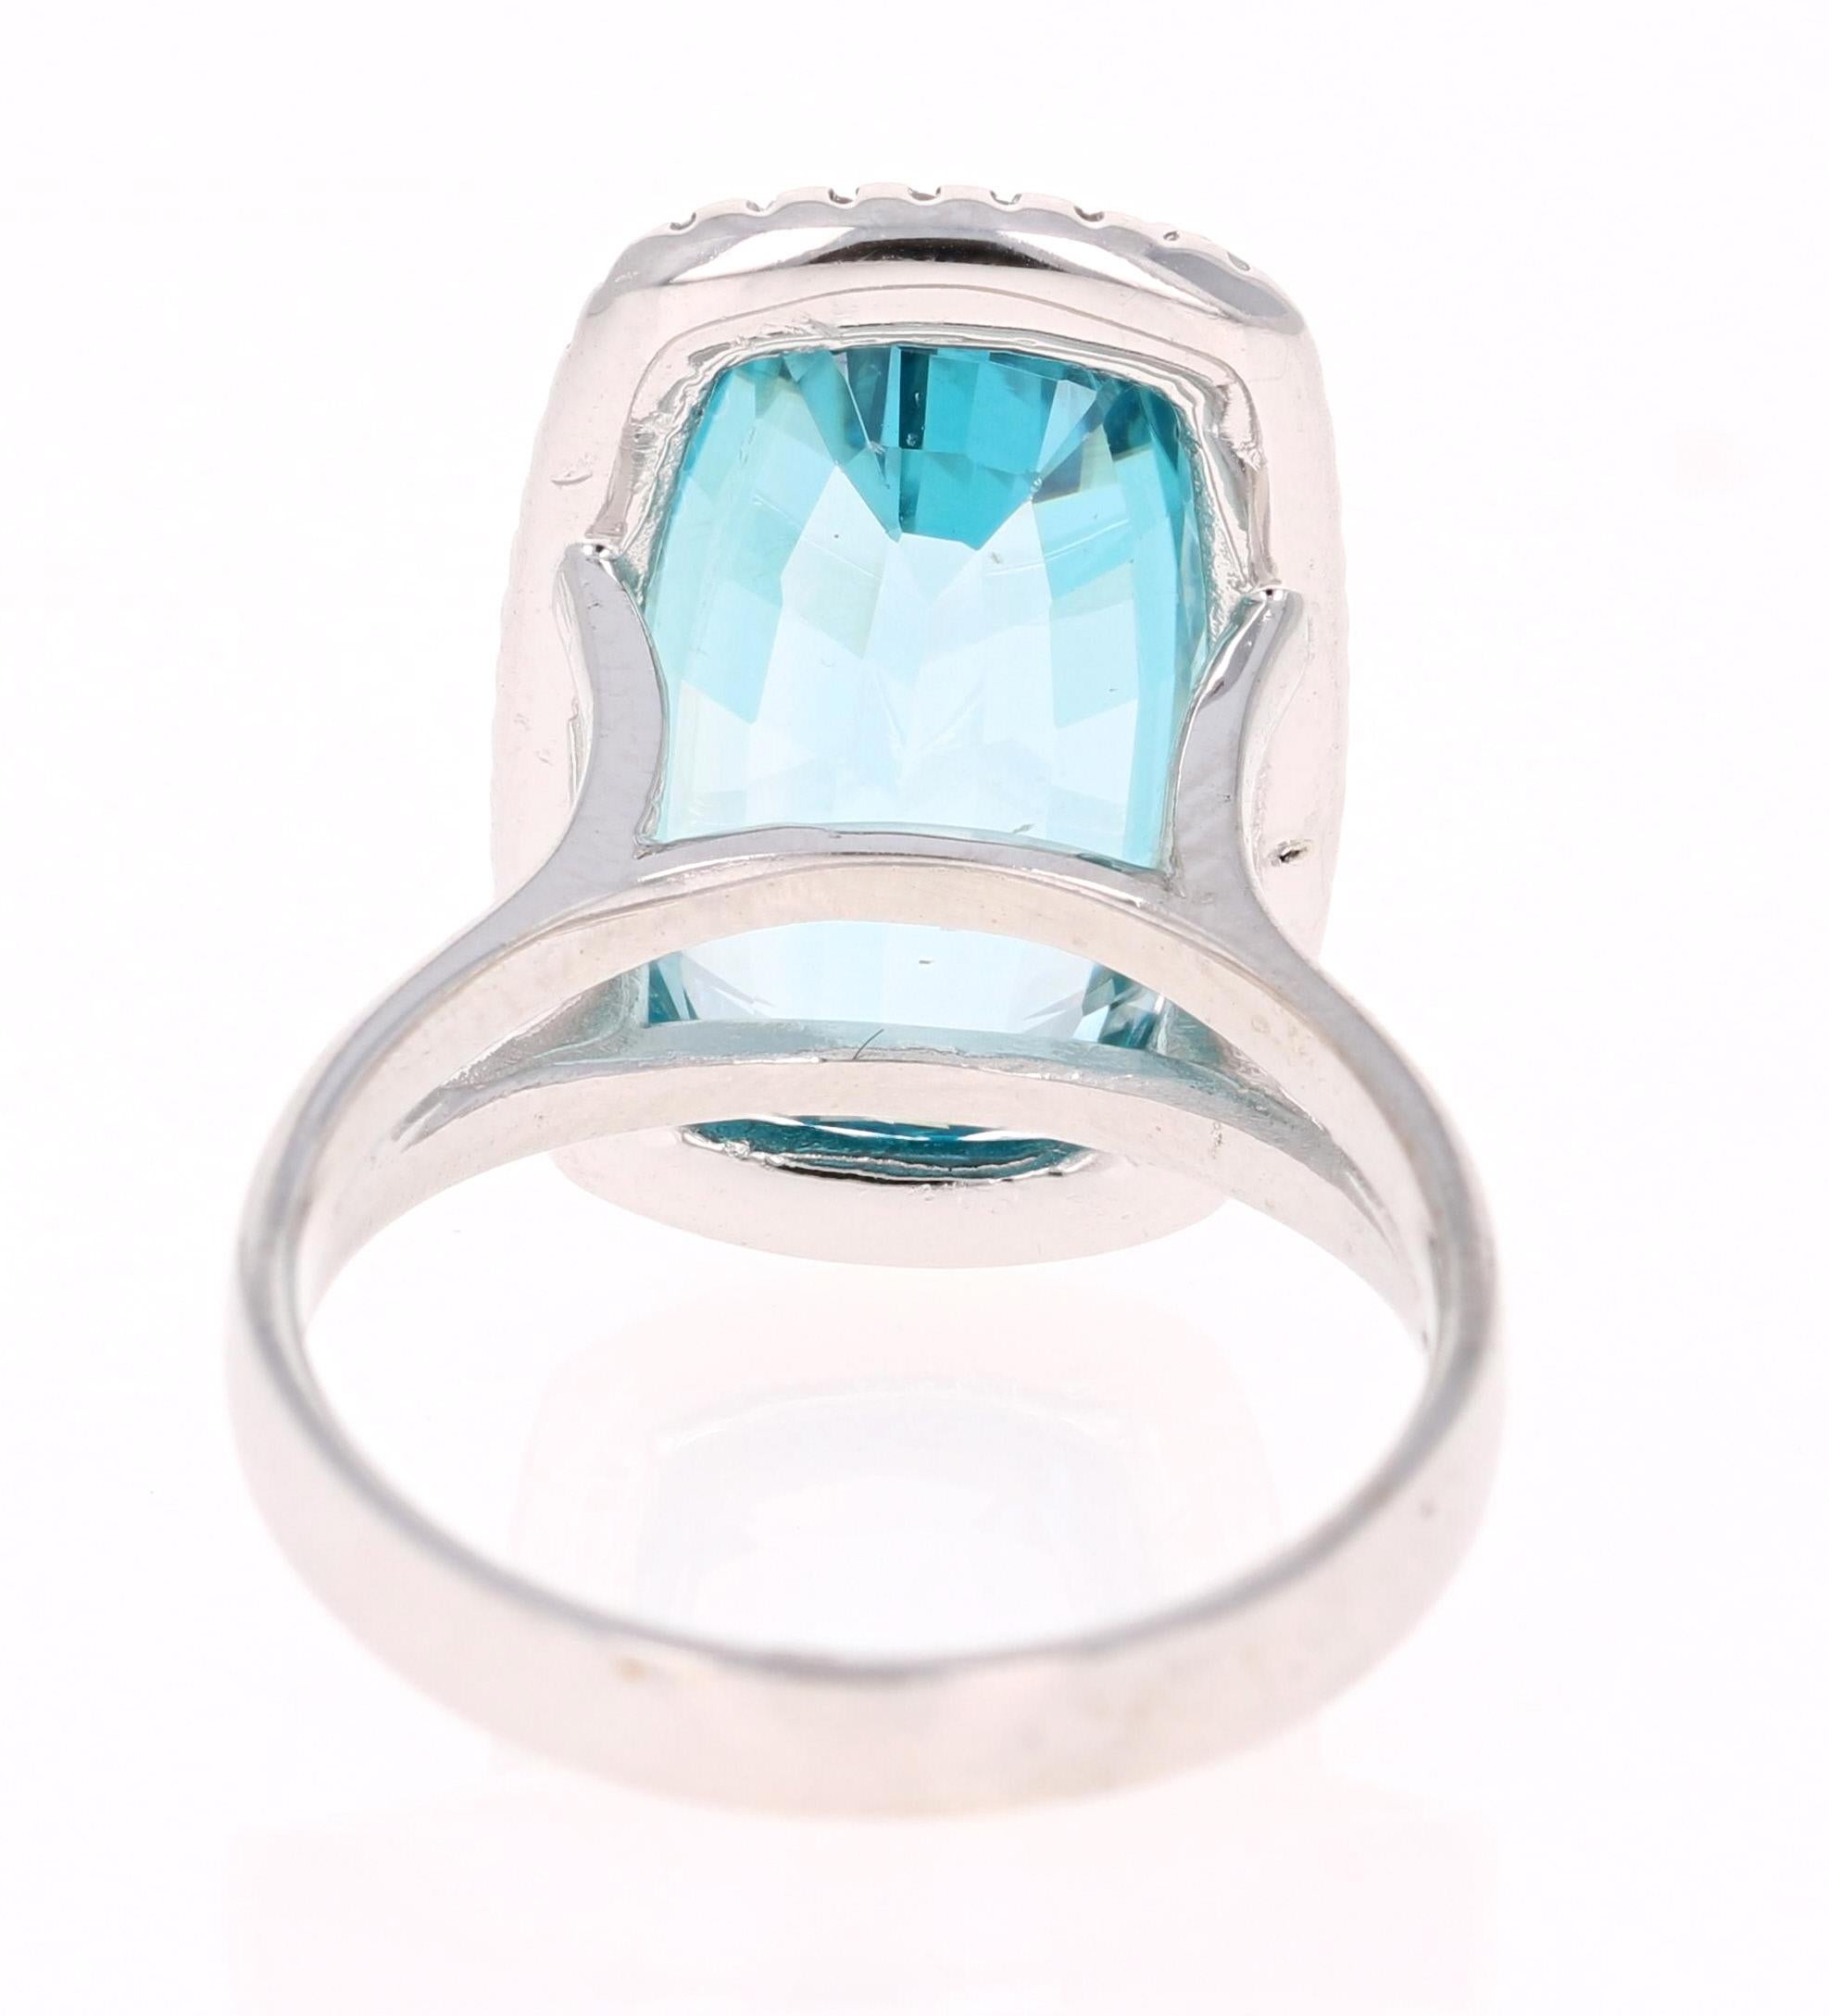 Oval Cut 12.55 Carat Blue Zircon Diamond White Gold Ring 18 Karat White Gold Ring